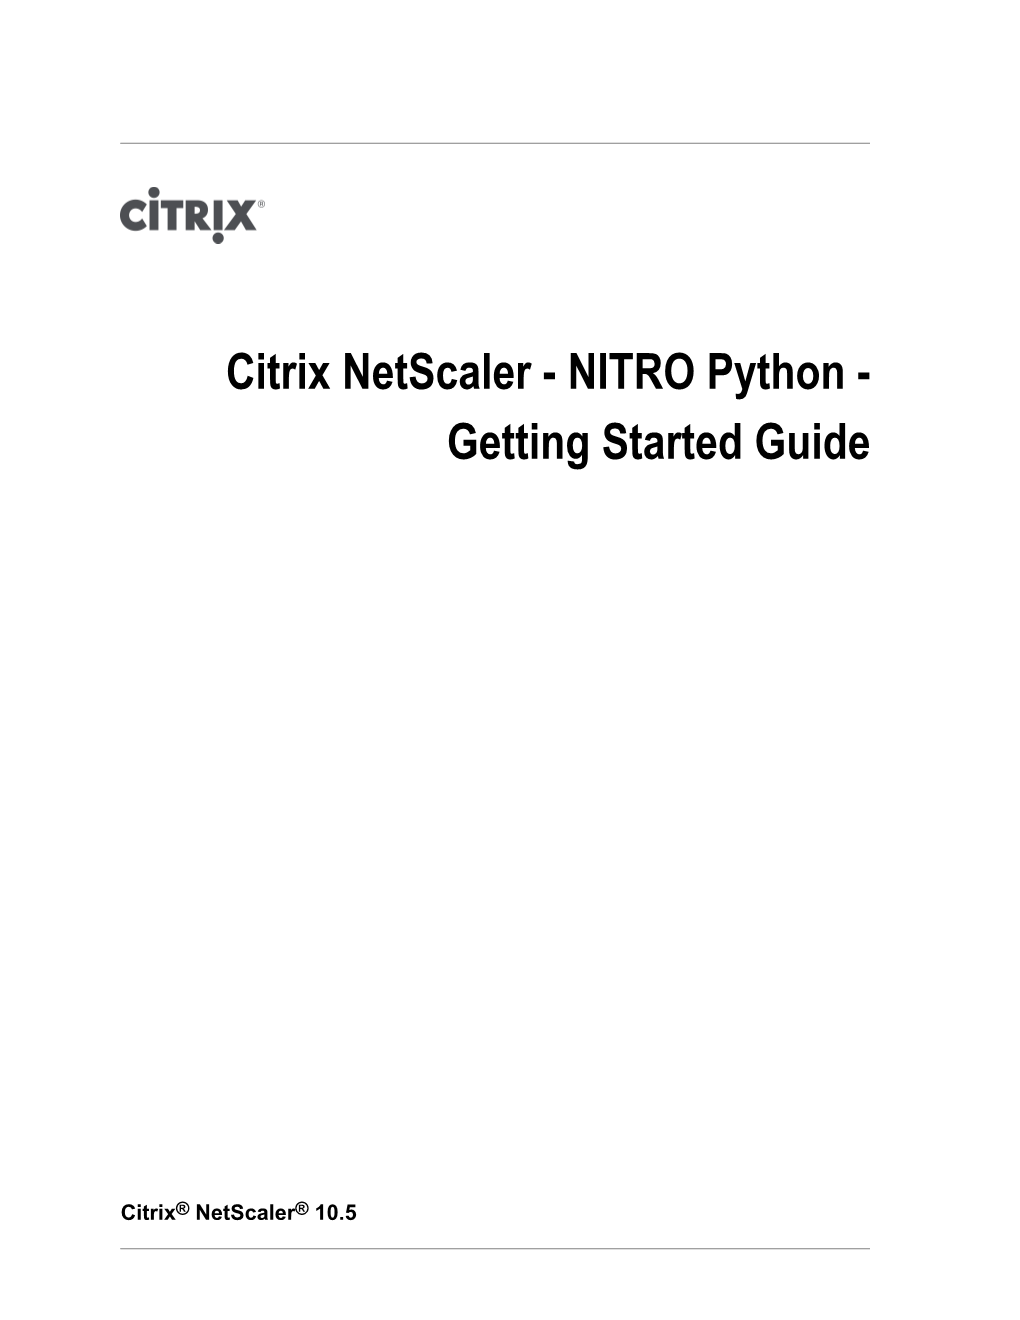 Citrix Netscaler - NITRO Python - Getting Started Guide